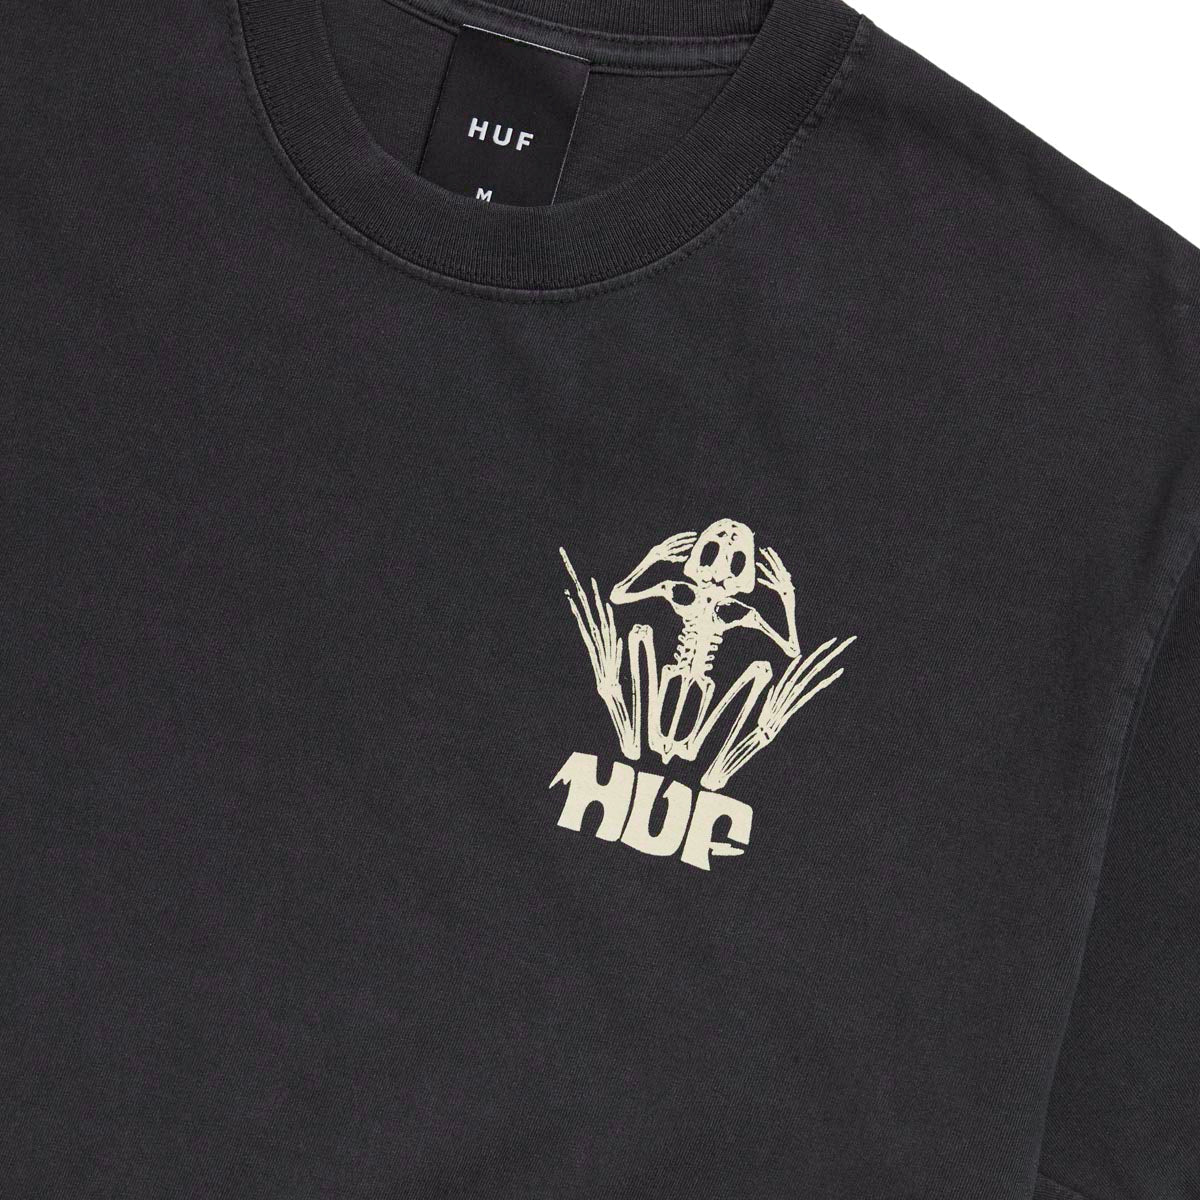 HUF Loosies Washed T-Shirt - Washed Black image 3